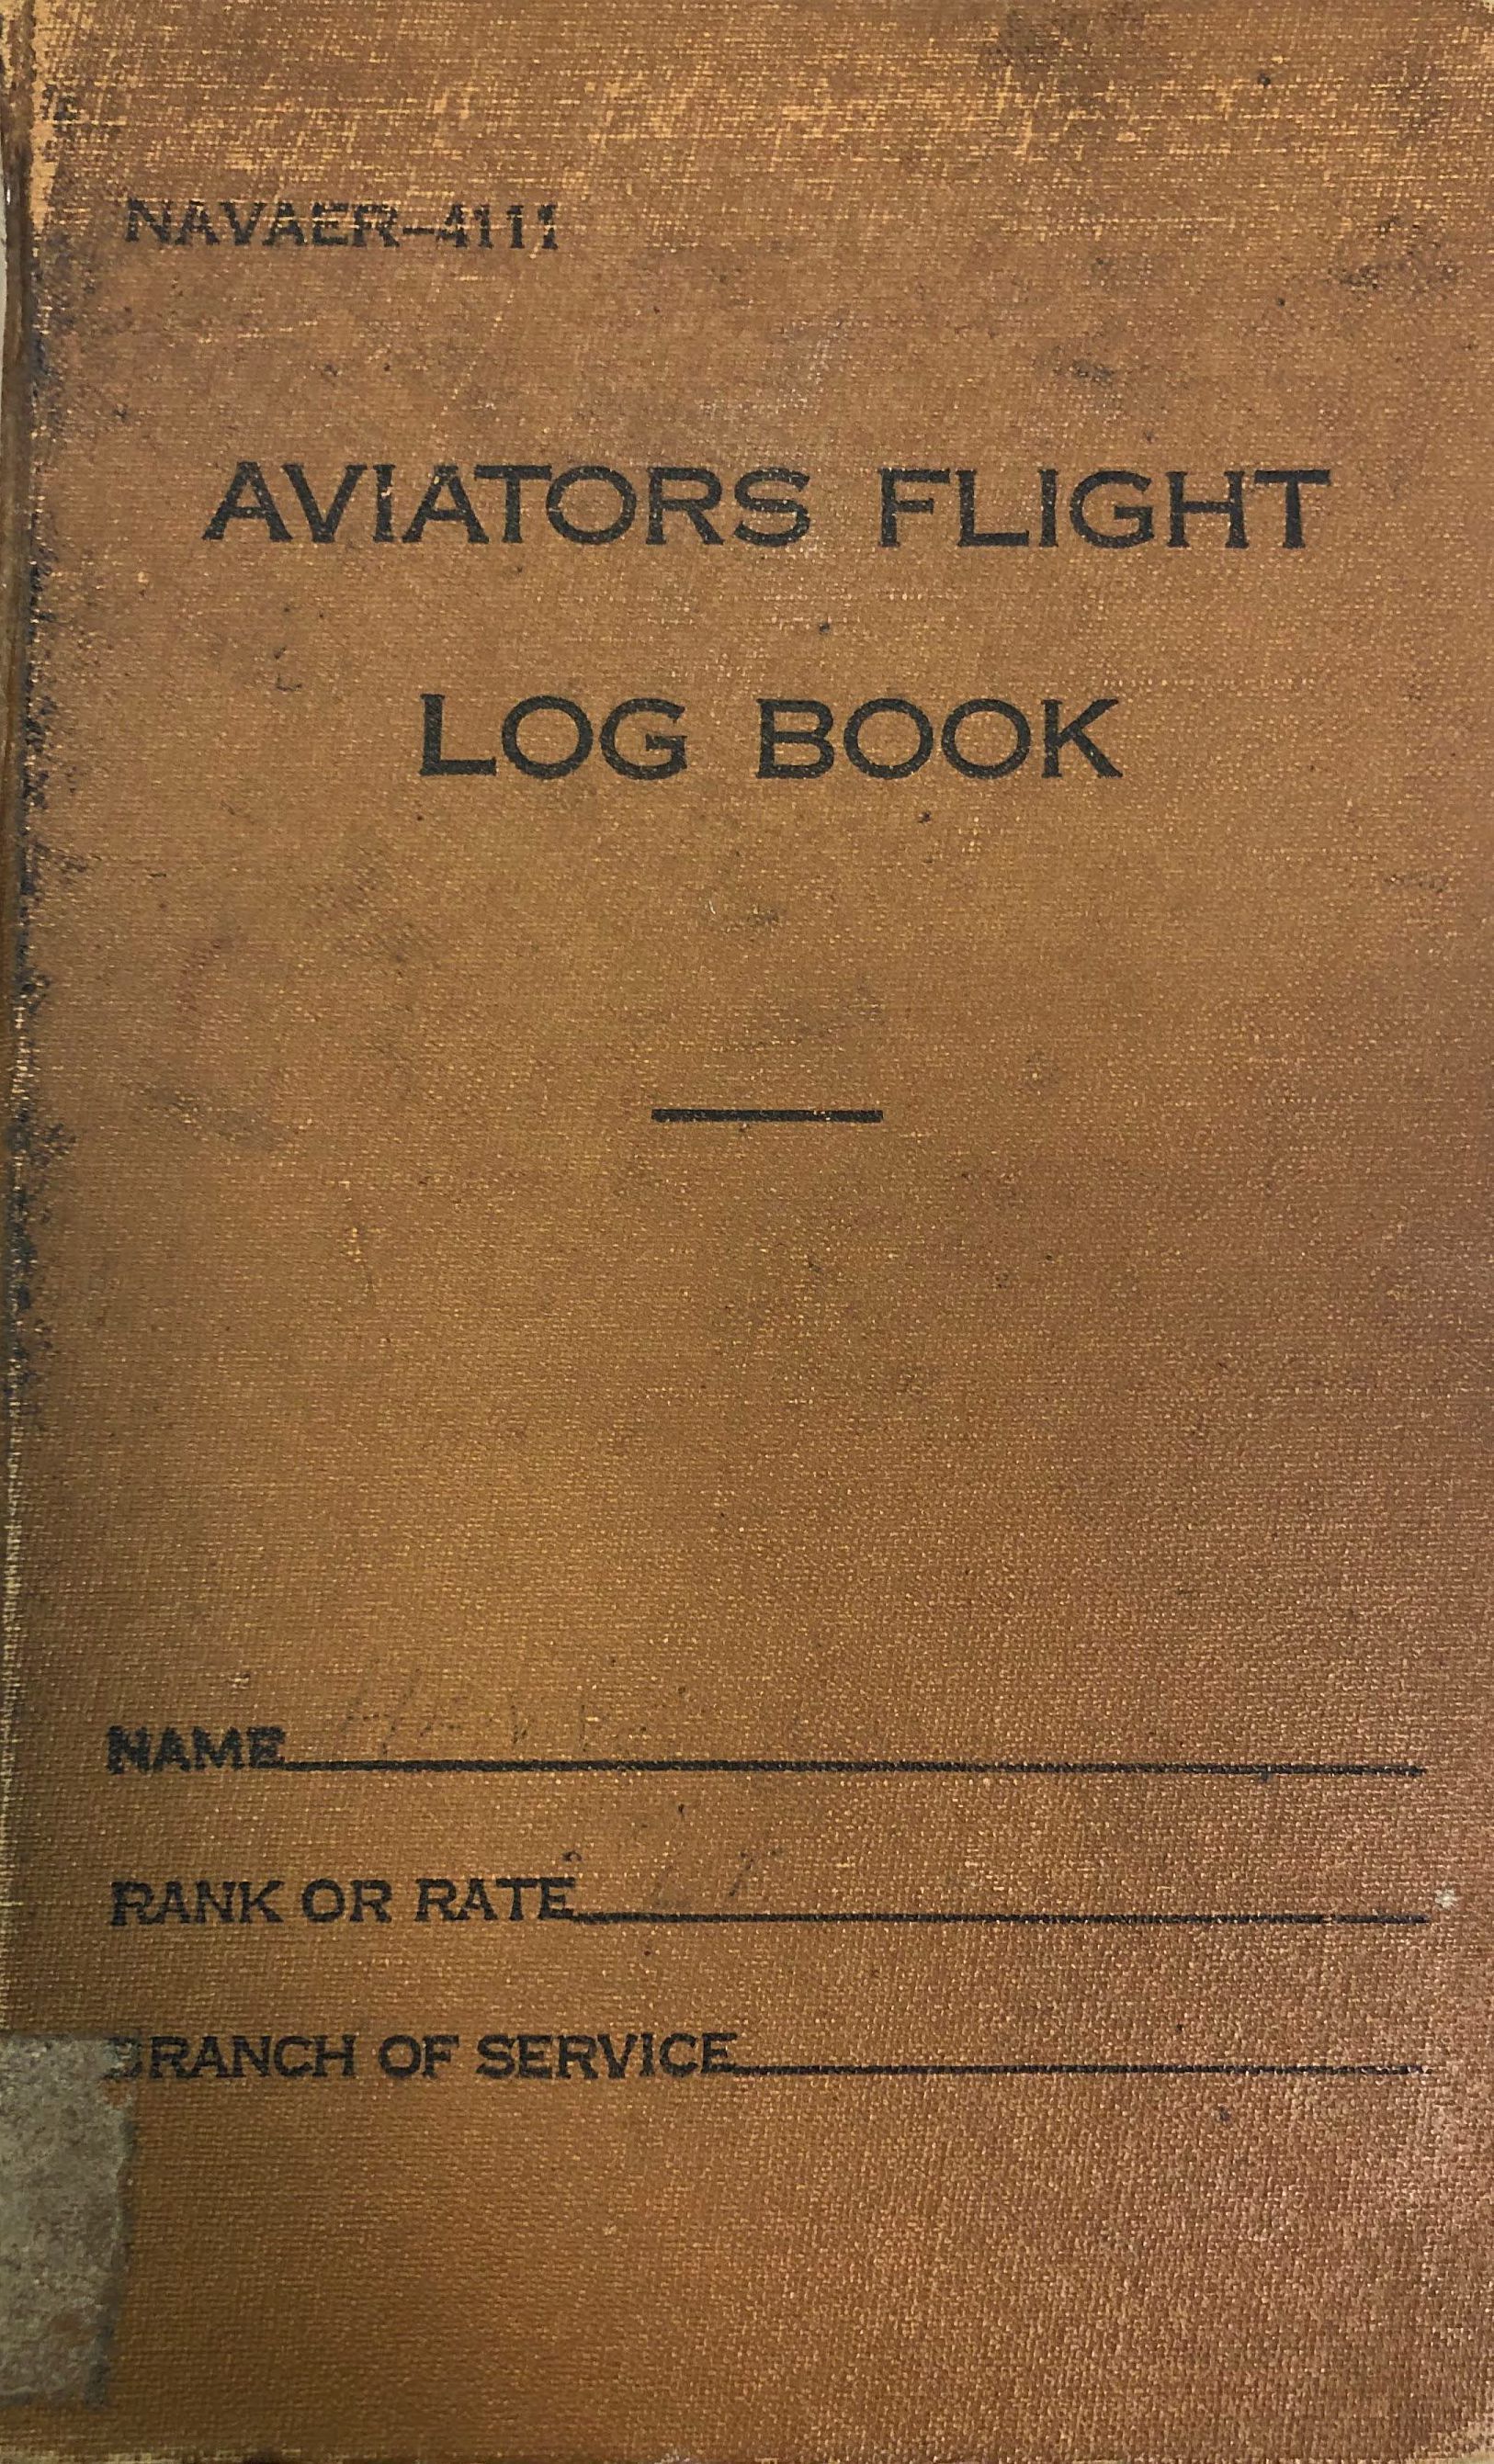 Primary Image of Aviators Flight Log Book of Gerald Hennesy (1944-1950)